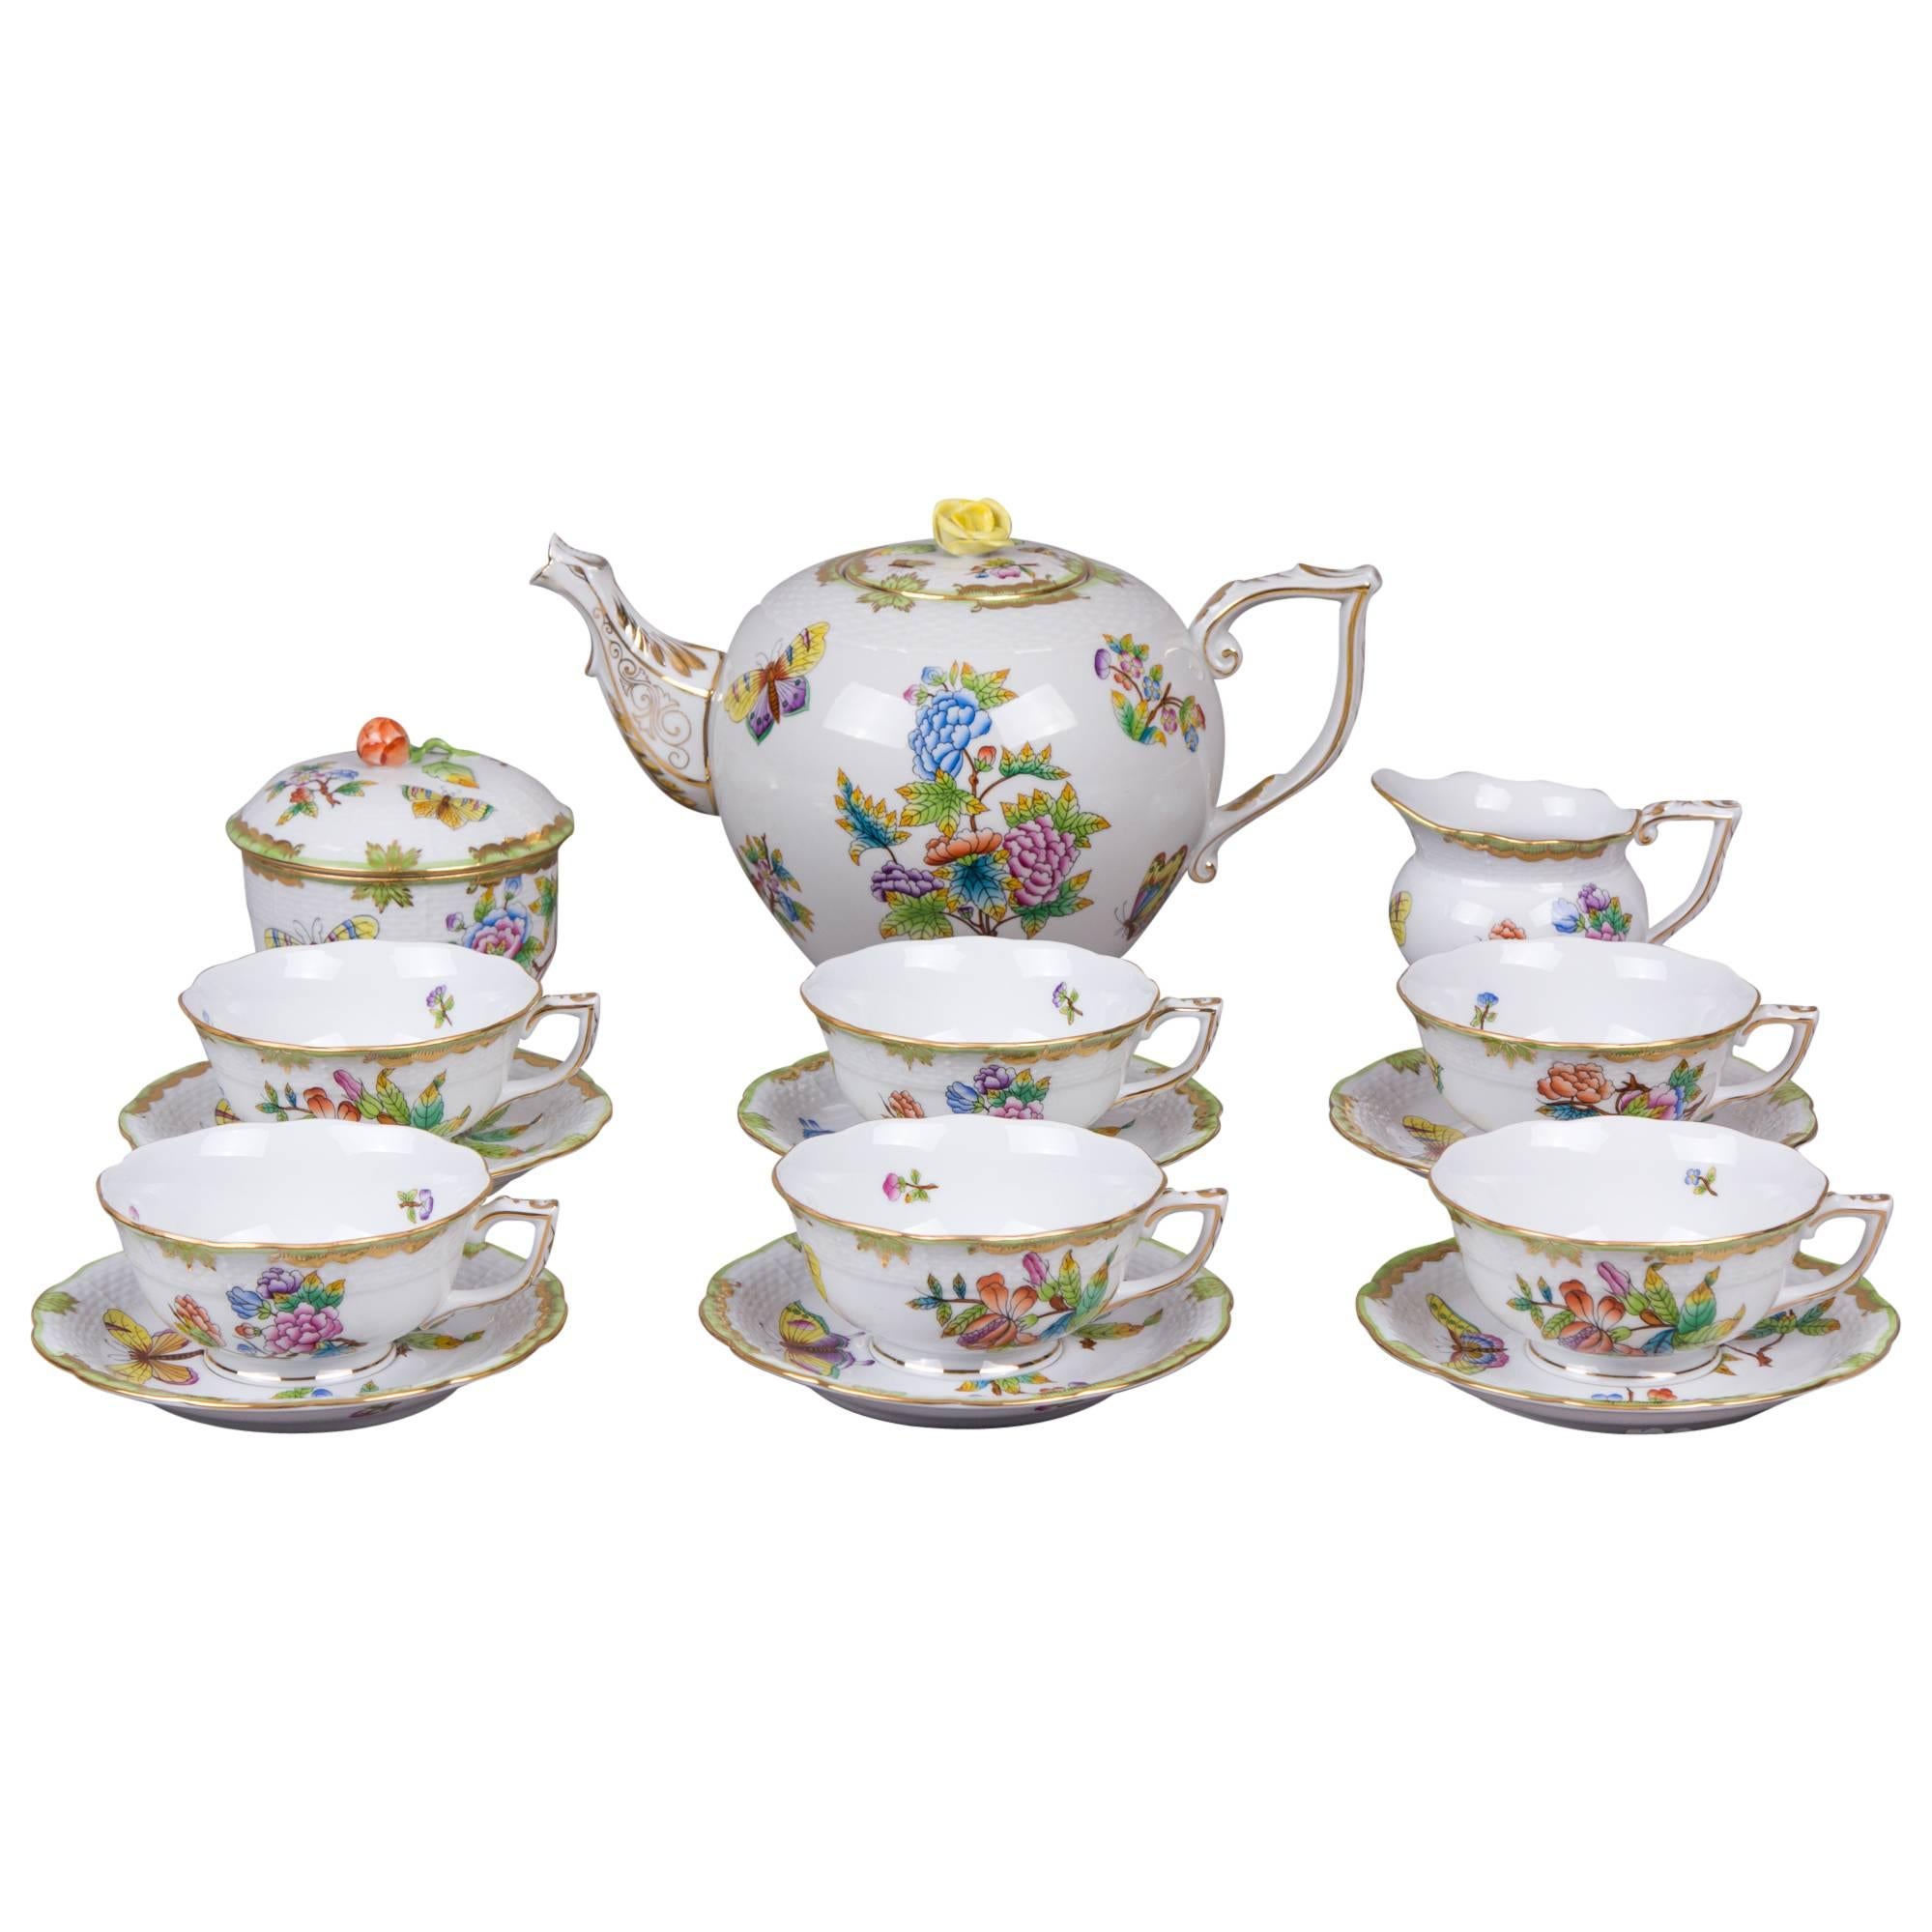 Herend Queen Victoria Tea Set for Six Persons, circa 1960